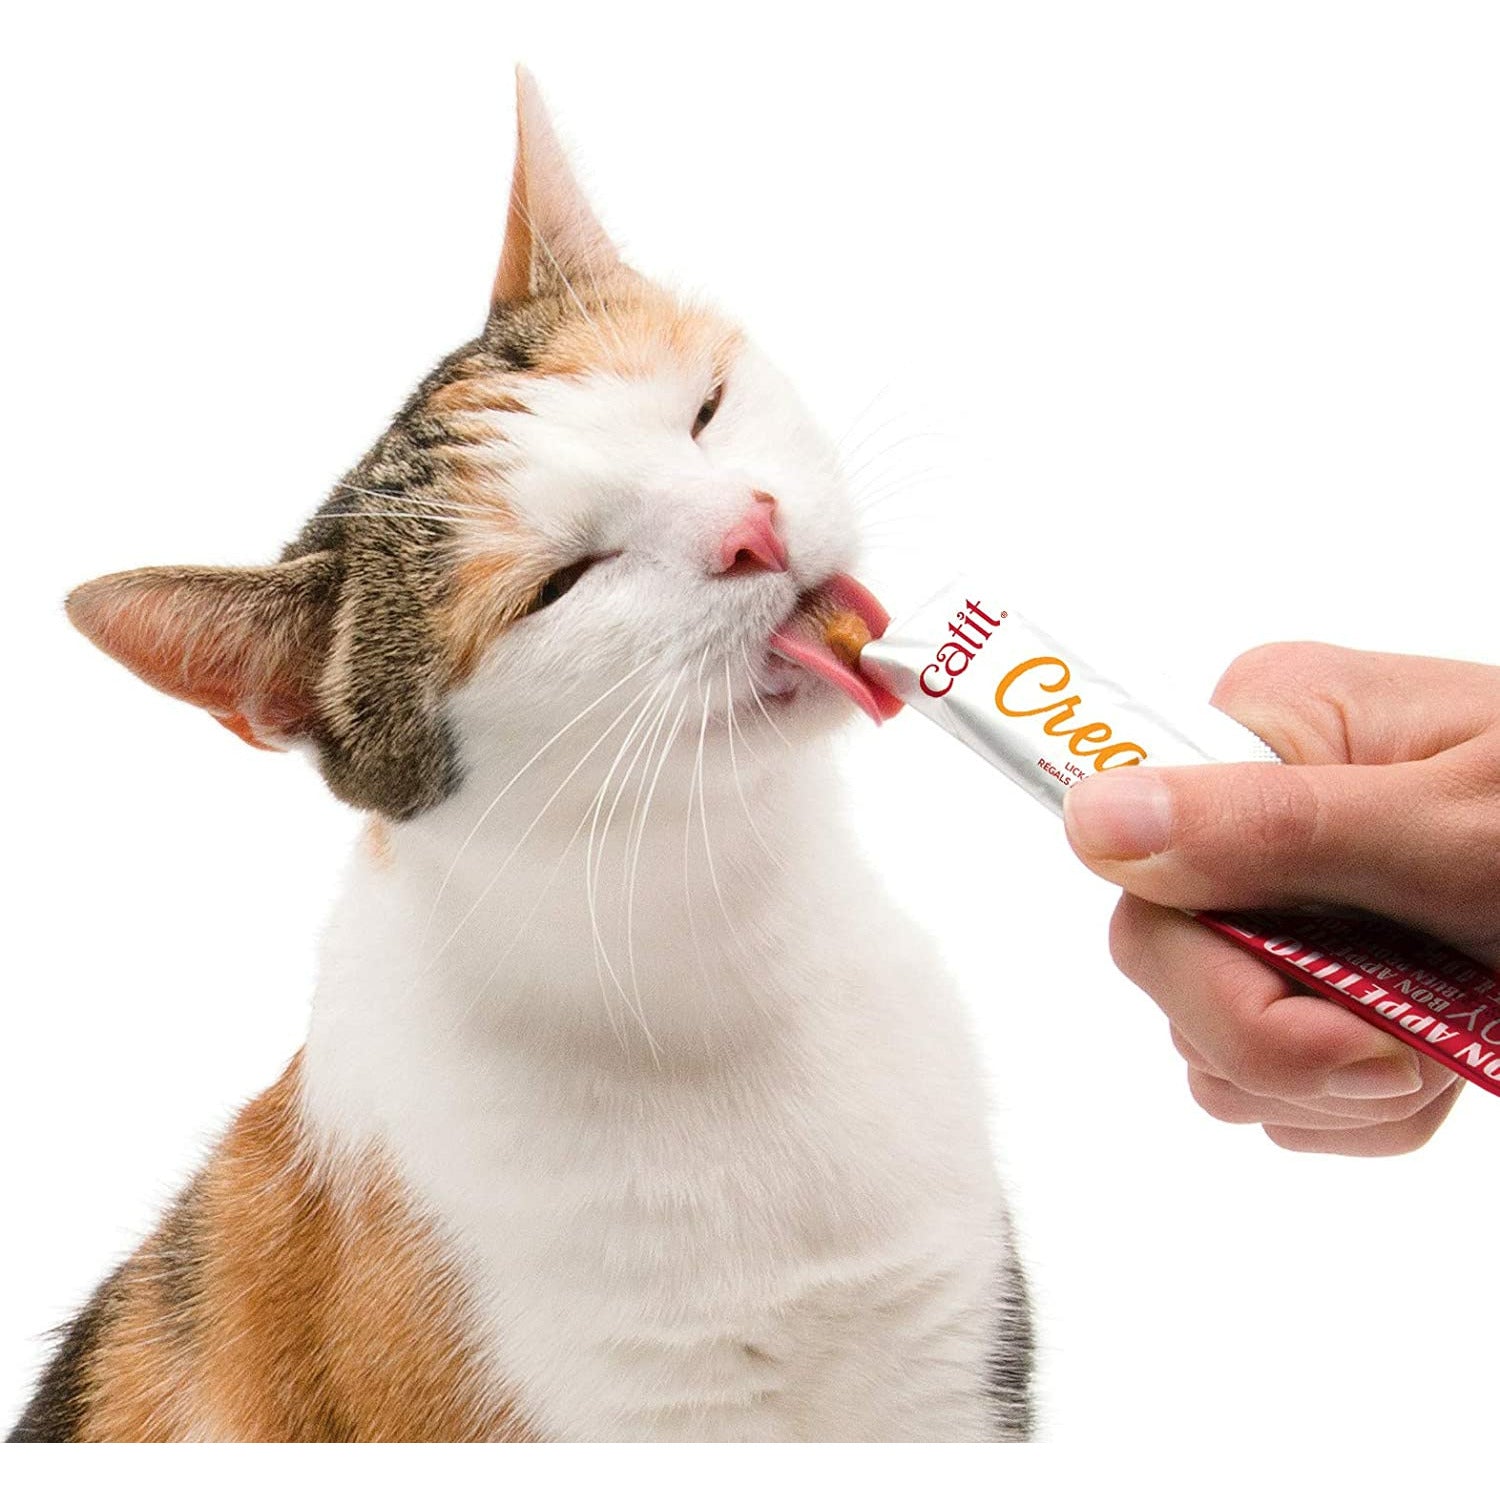 CatIt Creamy Lickable Treats Salmon  Cat Treats  | PetMax Canada